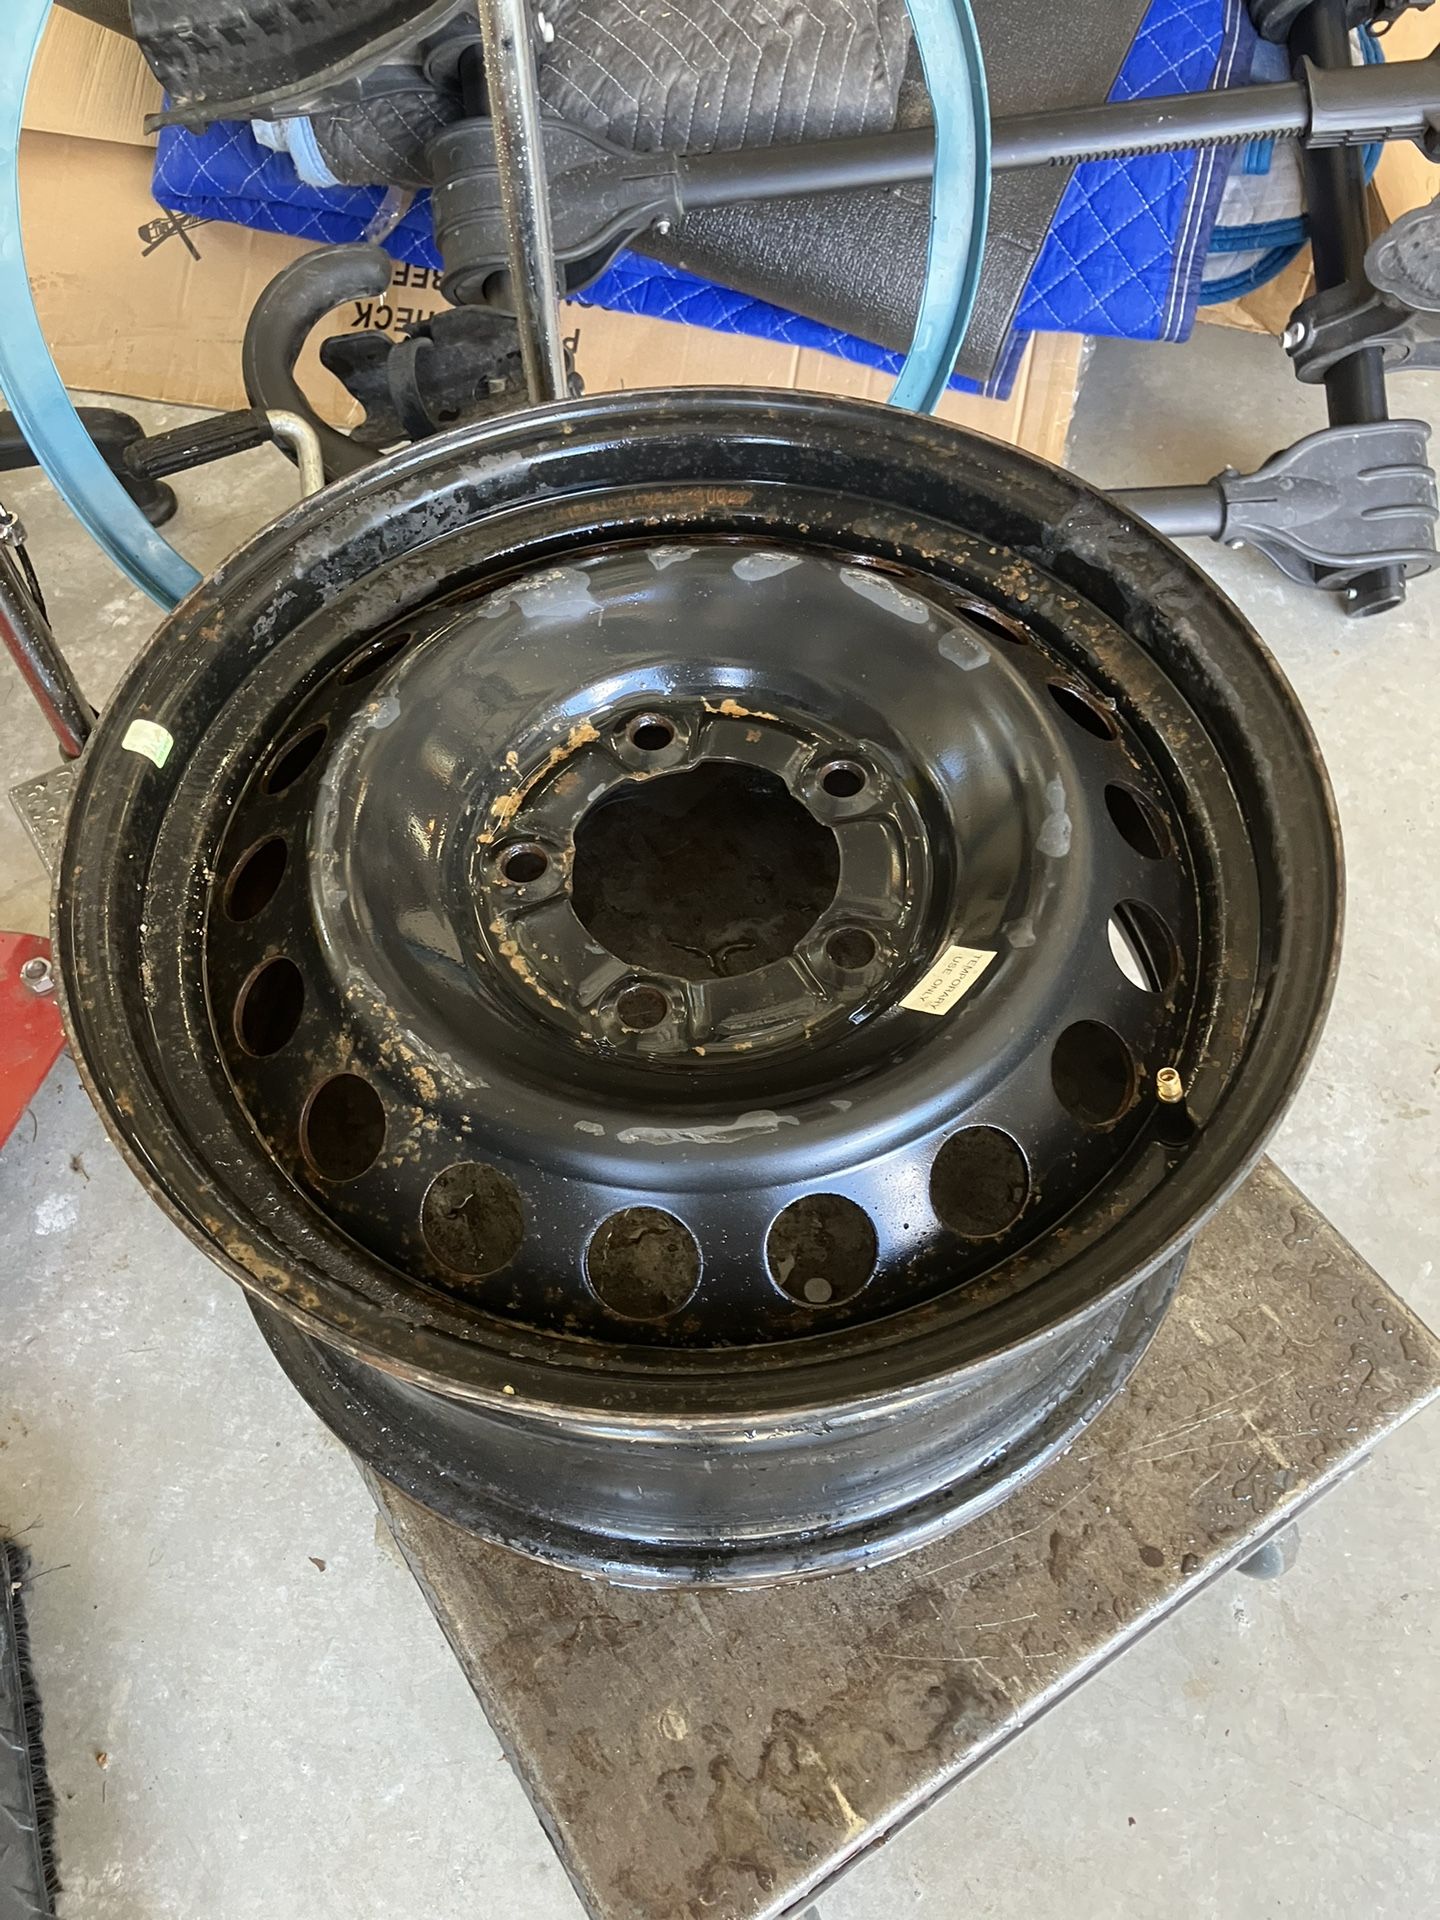 Toyota Tundra Spare Wheel